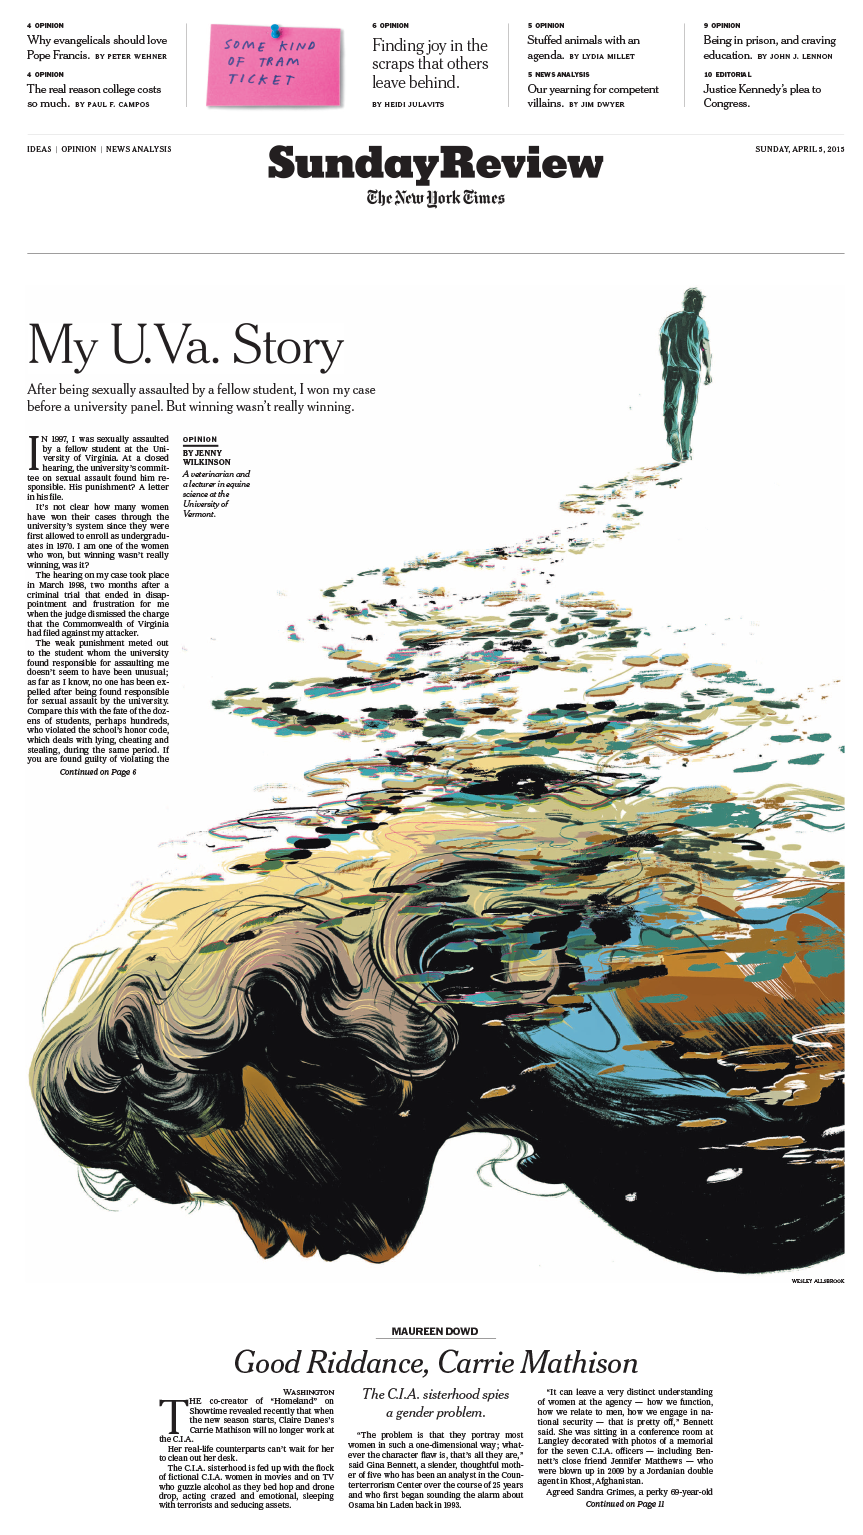 Sunday Review Cover: My U.Va. Story